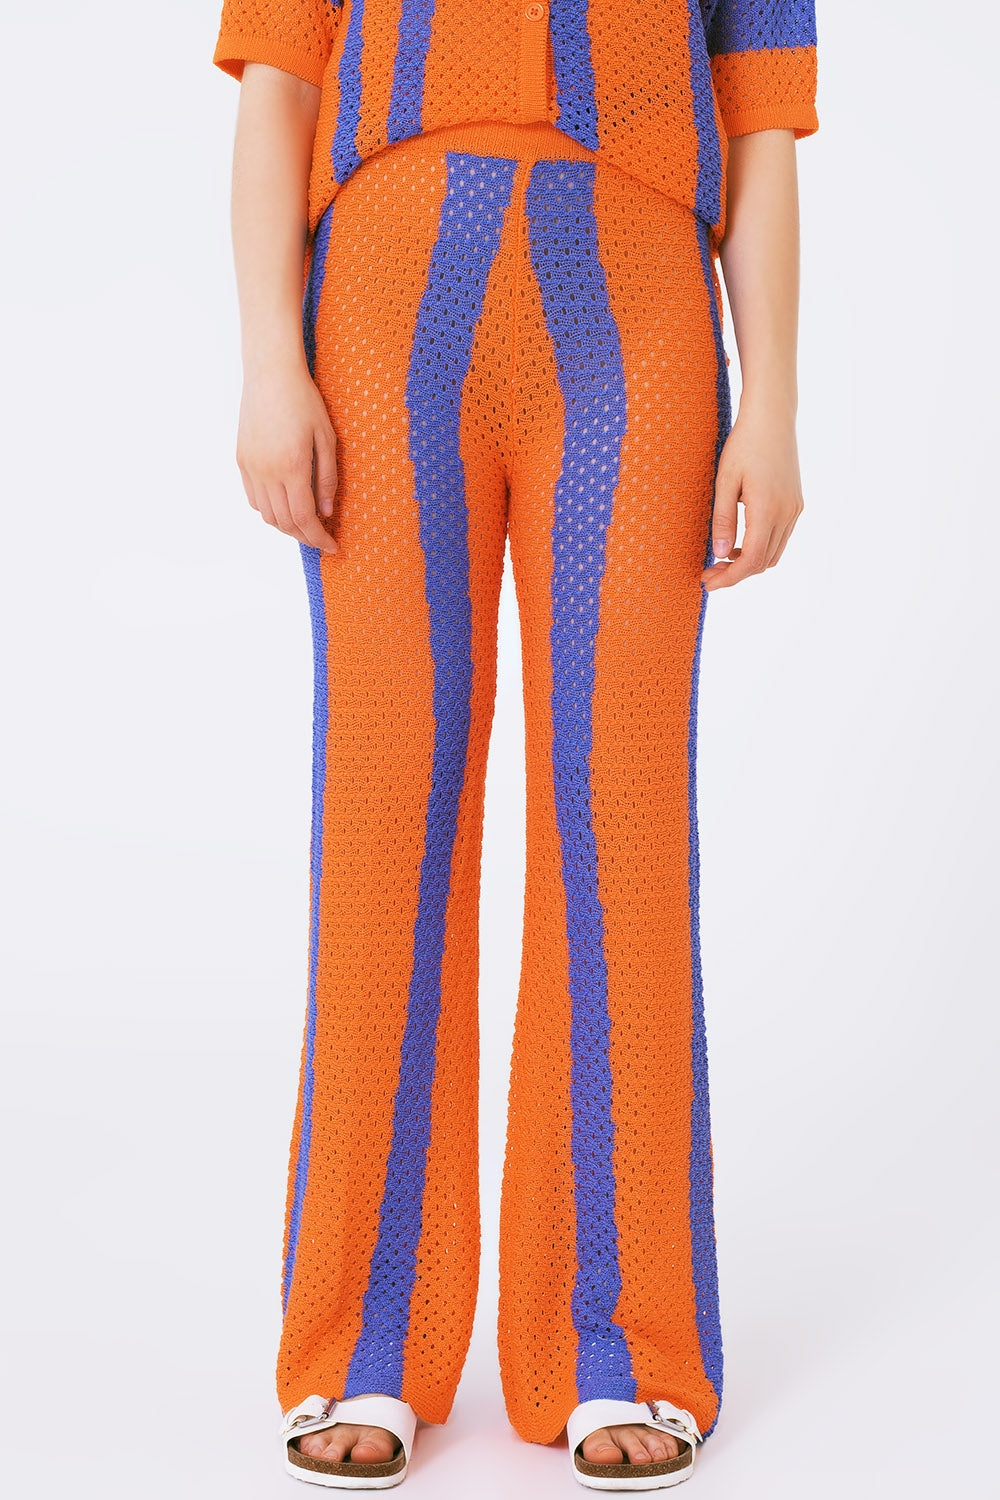 Q2 orange striped crochet pants